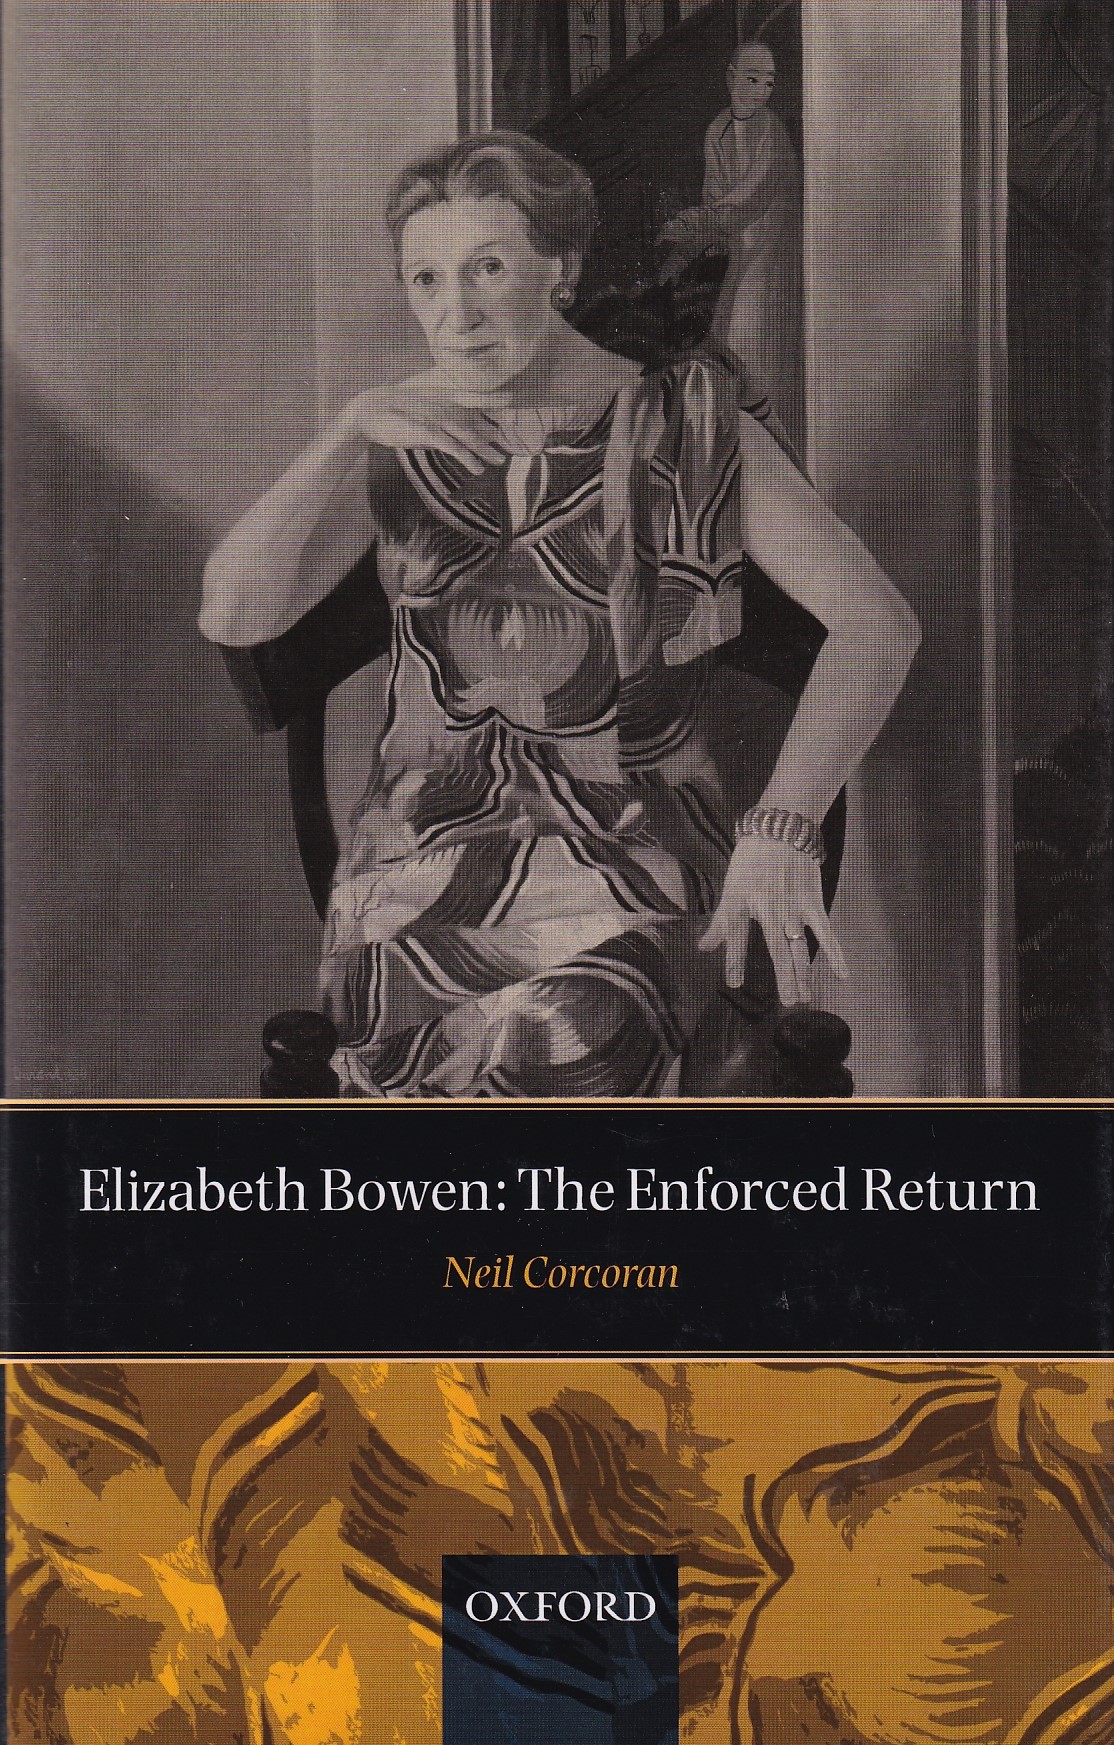 Elizabeth Bowen: The Enforced Return | Neil Corcoran | Charlie Byrne's